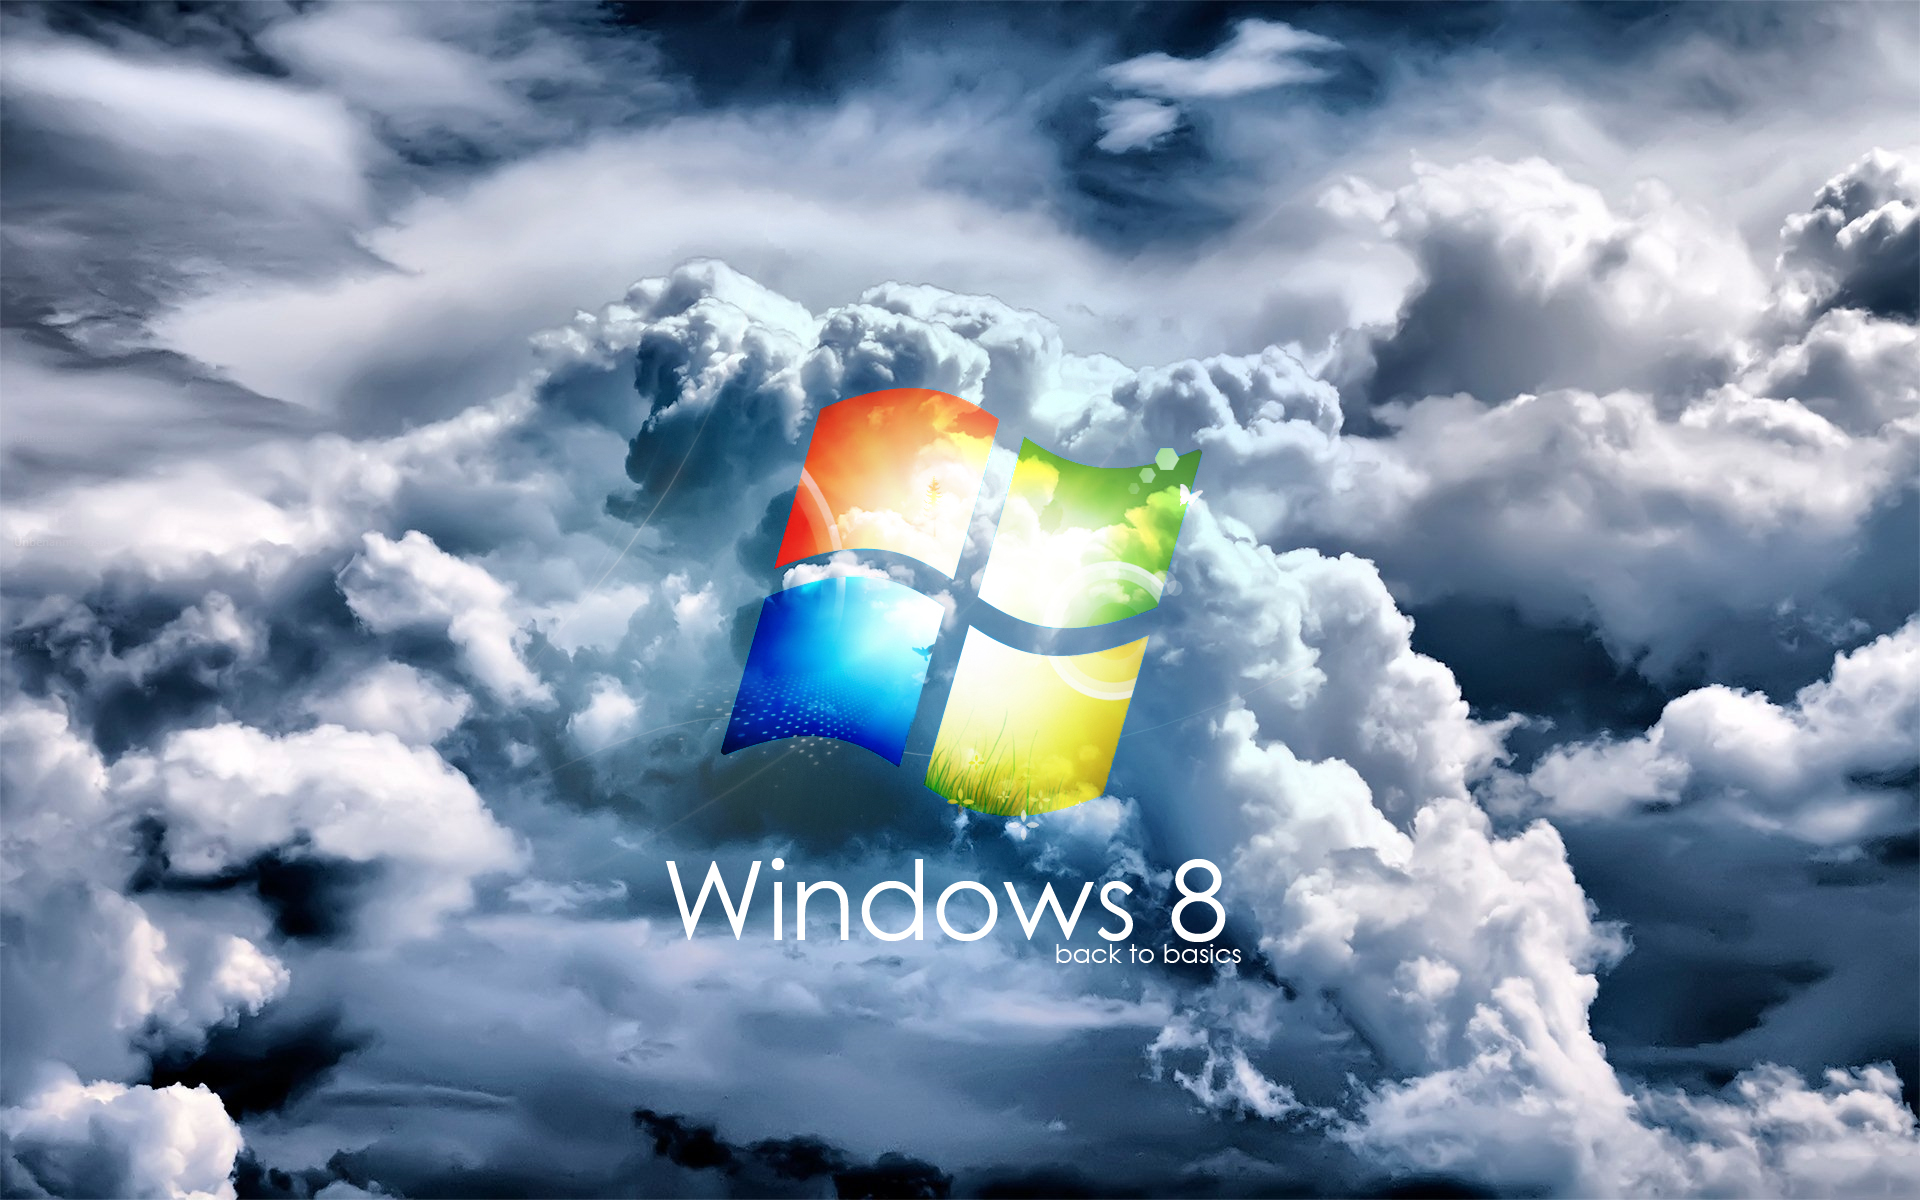 [72+] Windows 10 Animated Wallpaper Downloads | WallpaperSafari.com